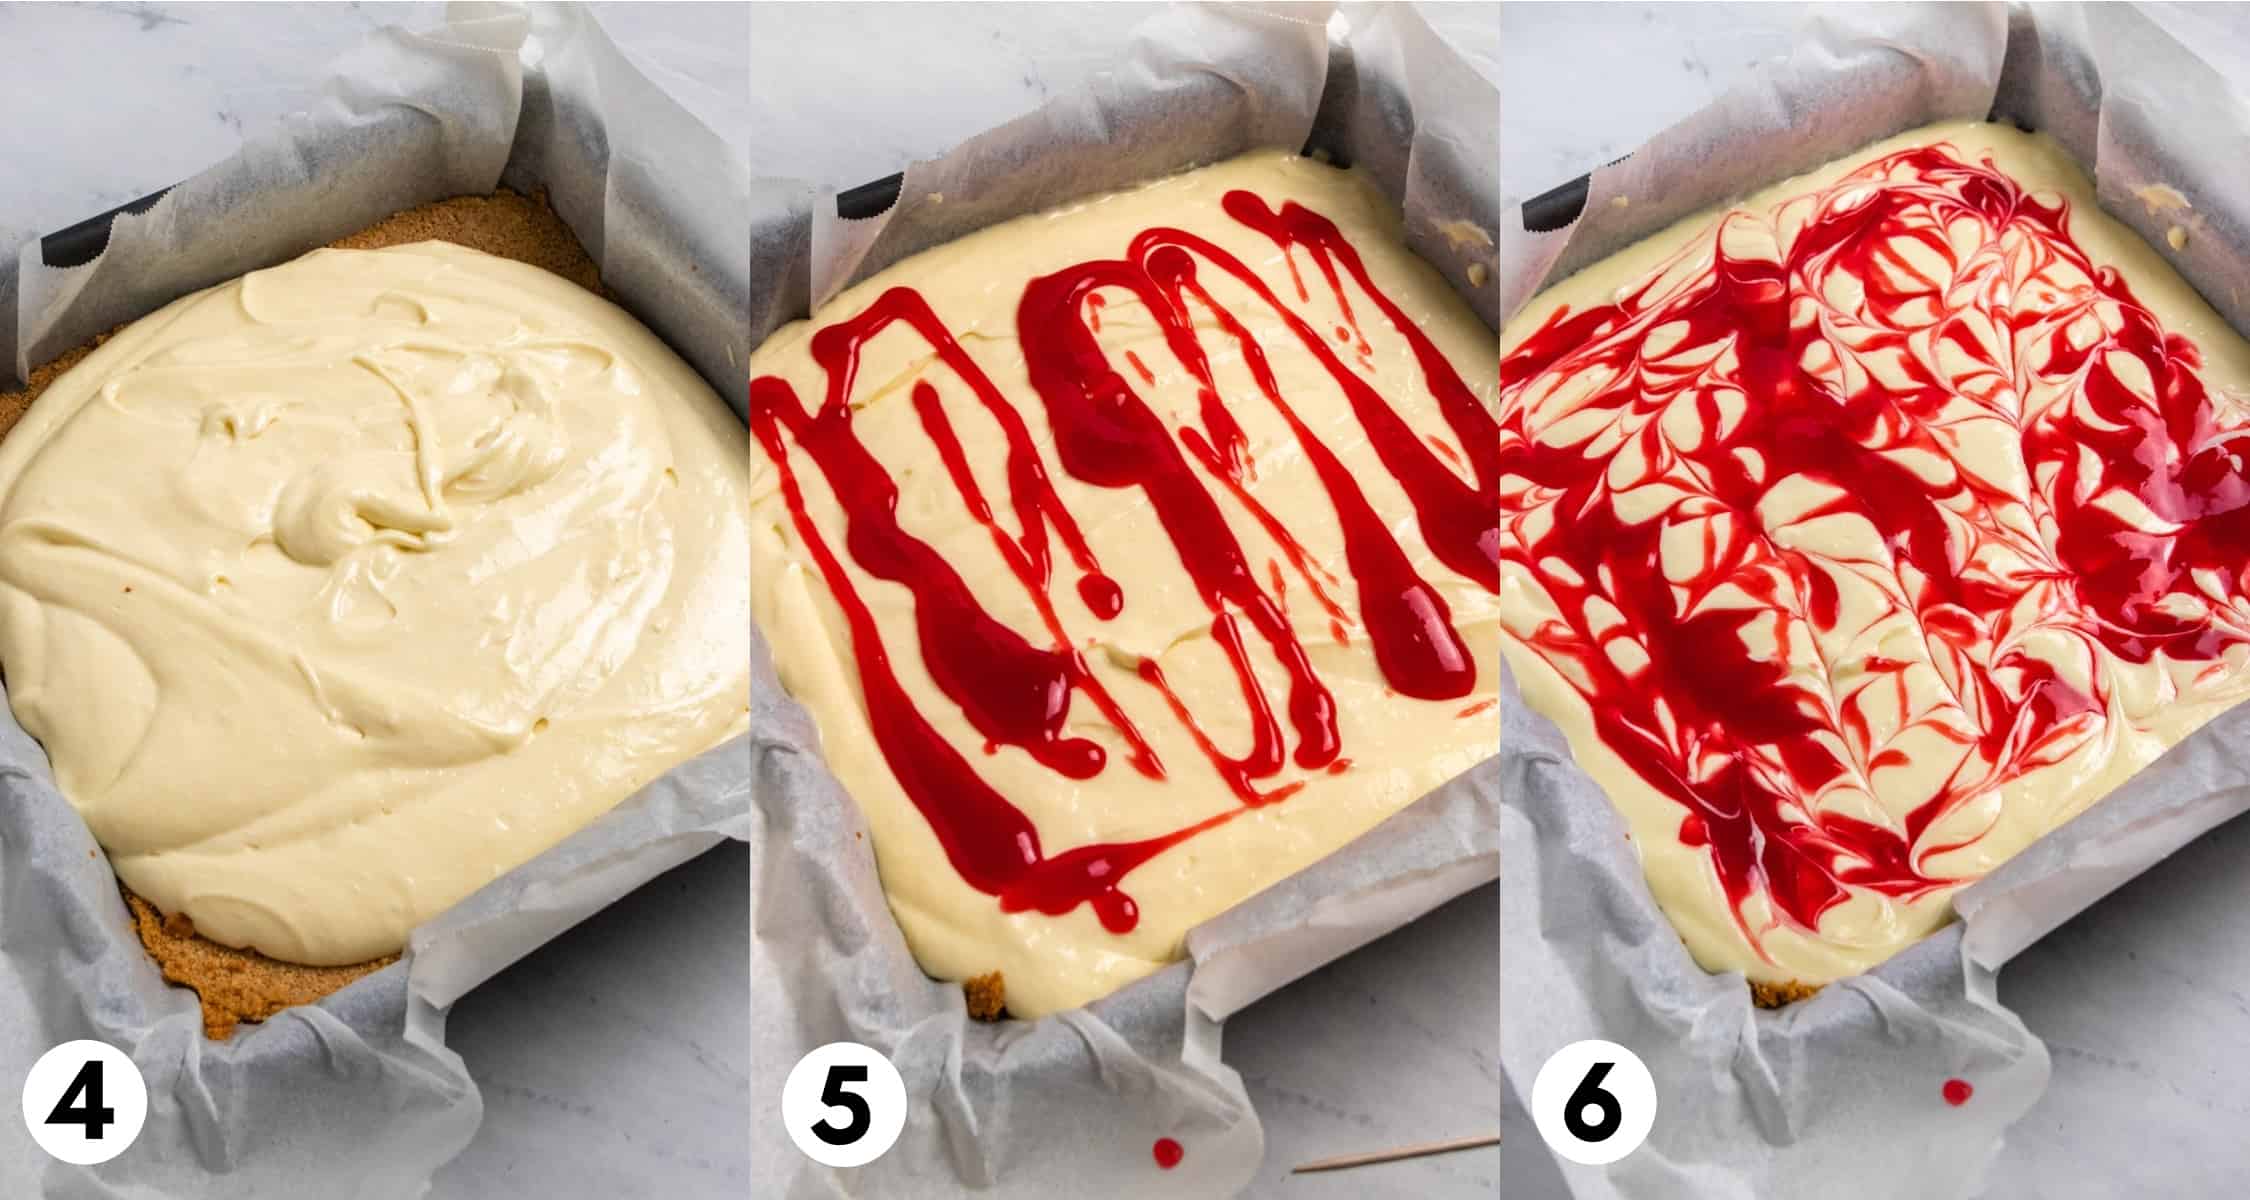 Cheesecake spread on graham cracker crust and raspberry sauce swirled on top.